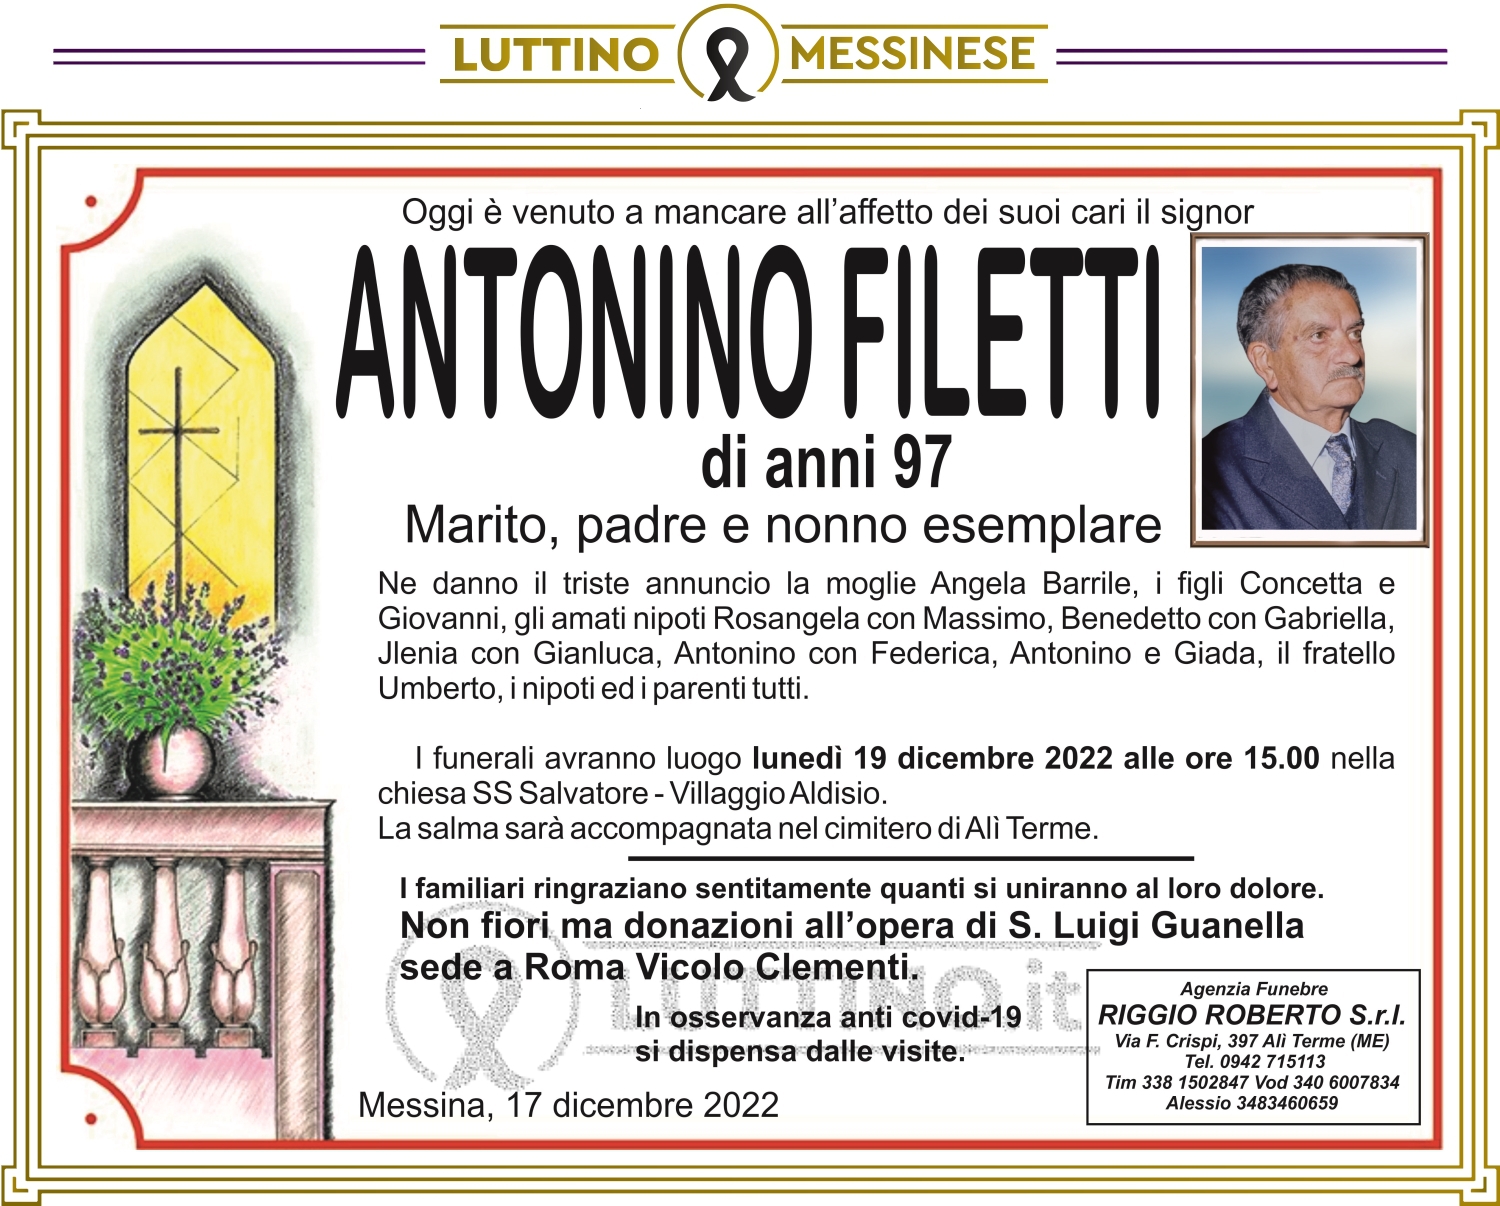 Antonino Filetti